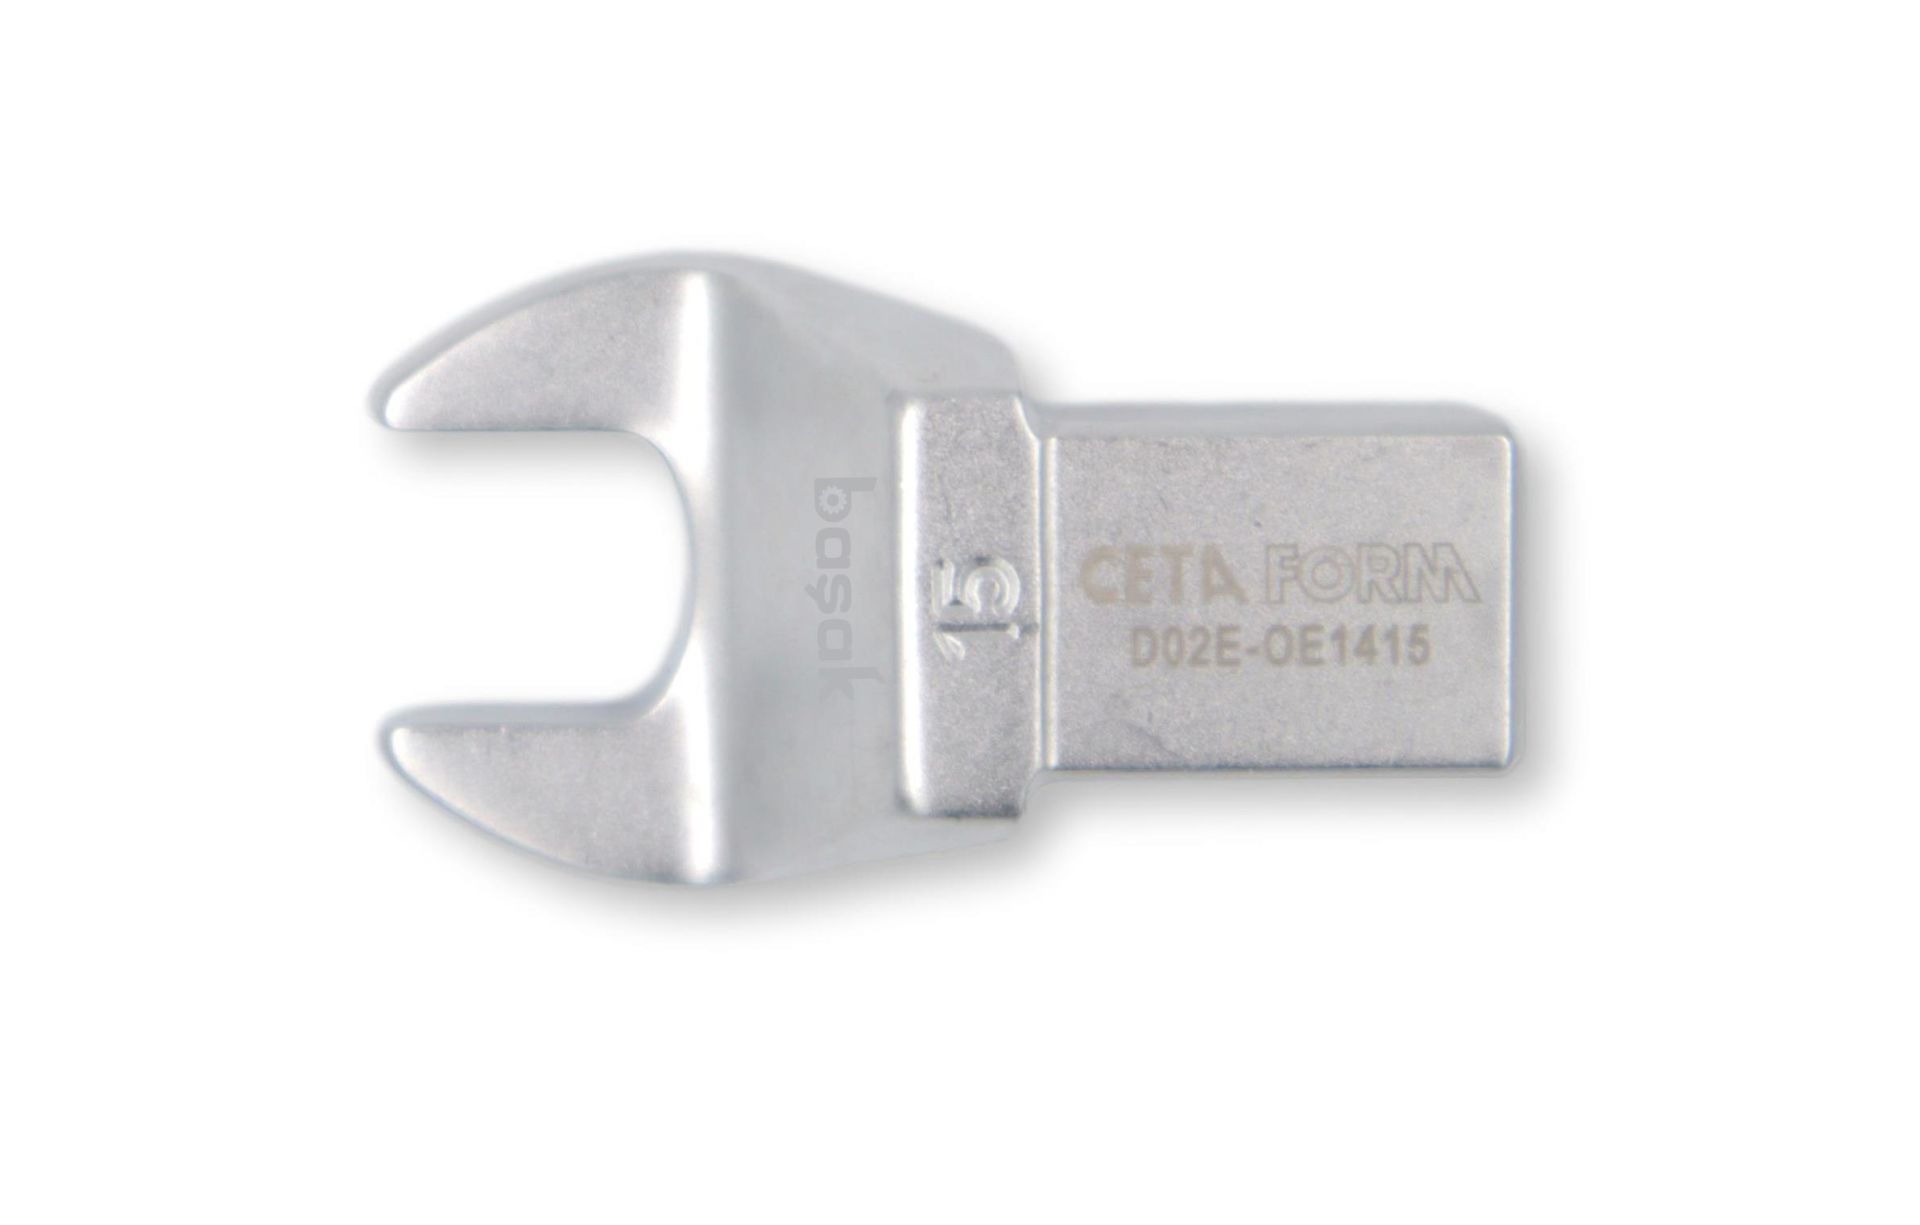 Ceta Form 15mm Açık Ağız Tork Anahtar Ucu (14x18mm) D02E-OE1415